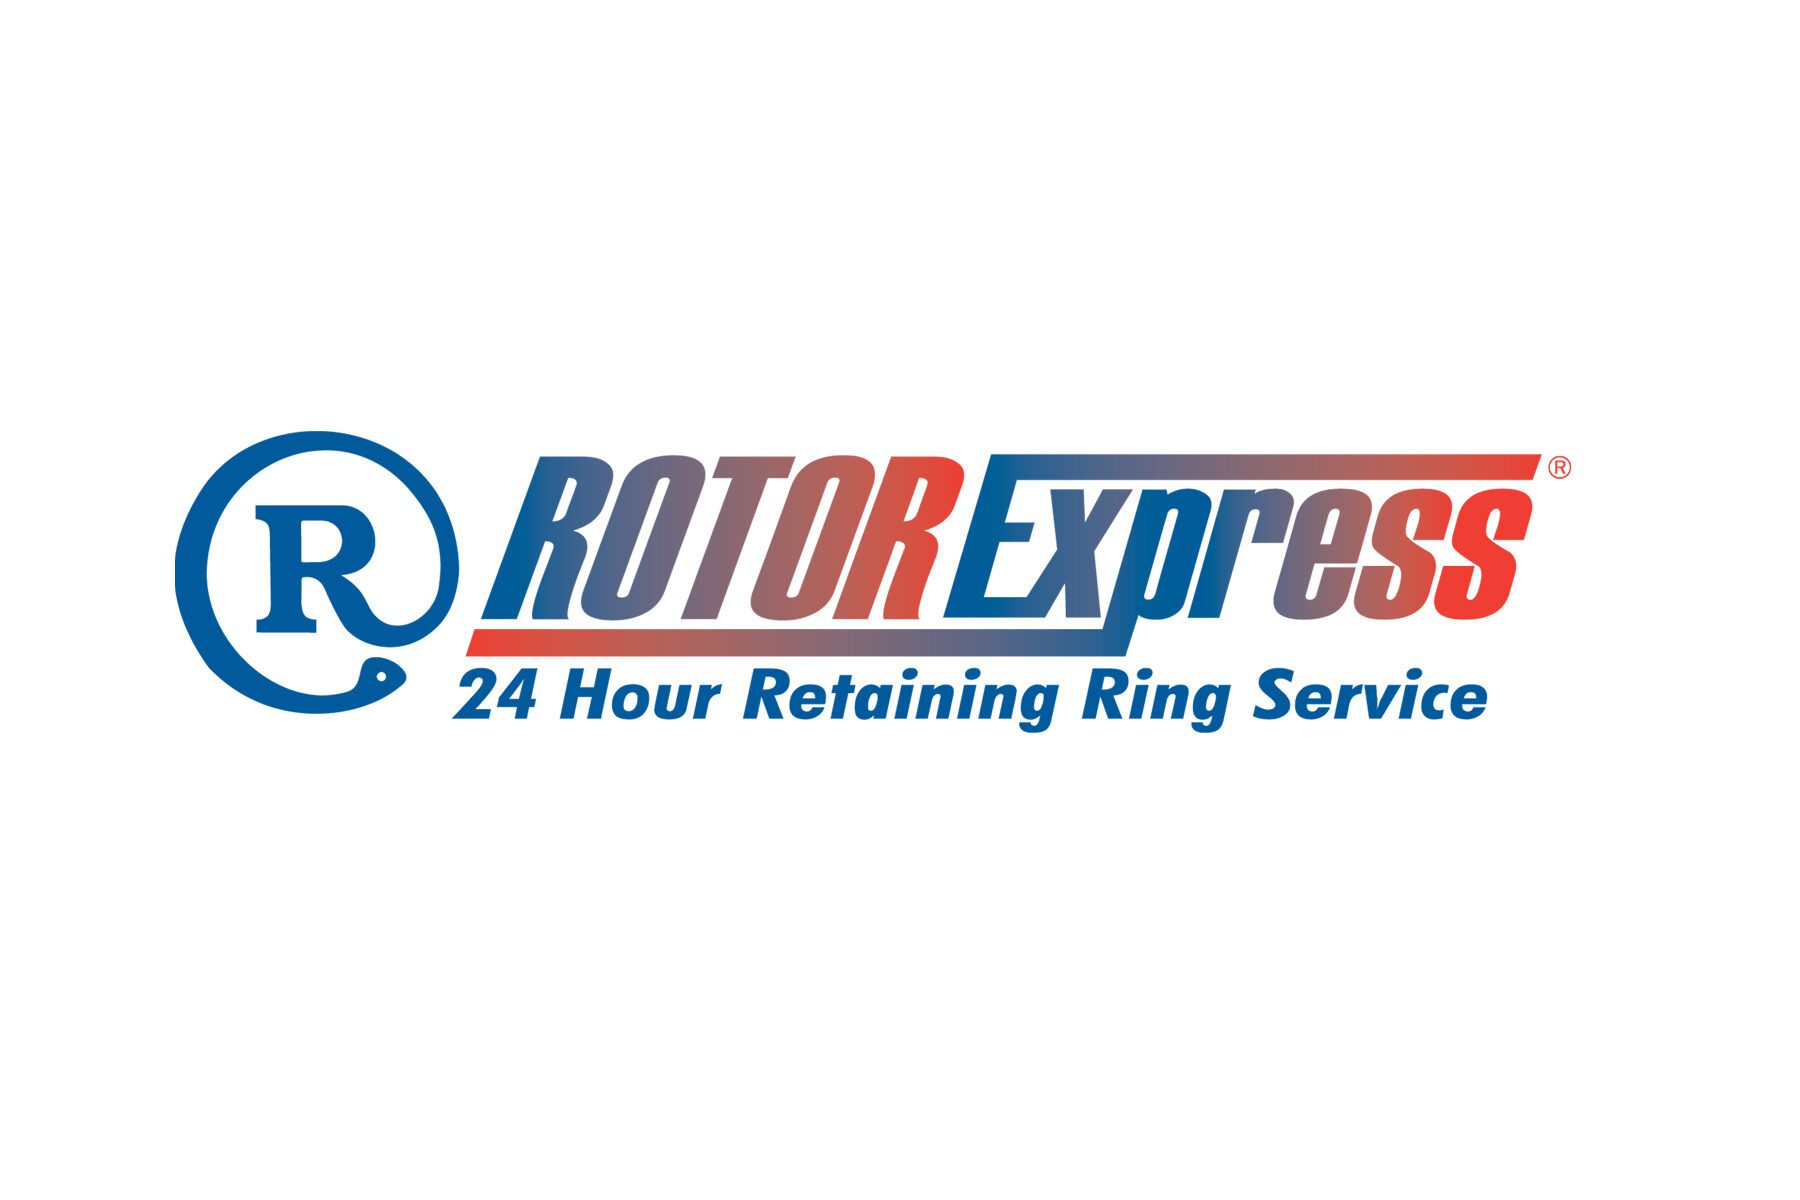 RotorExpress Partner Program